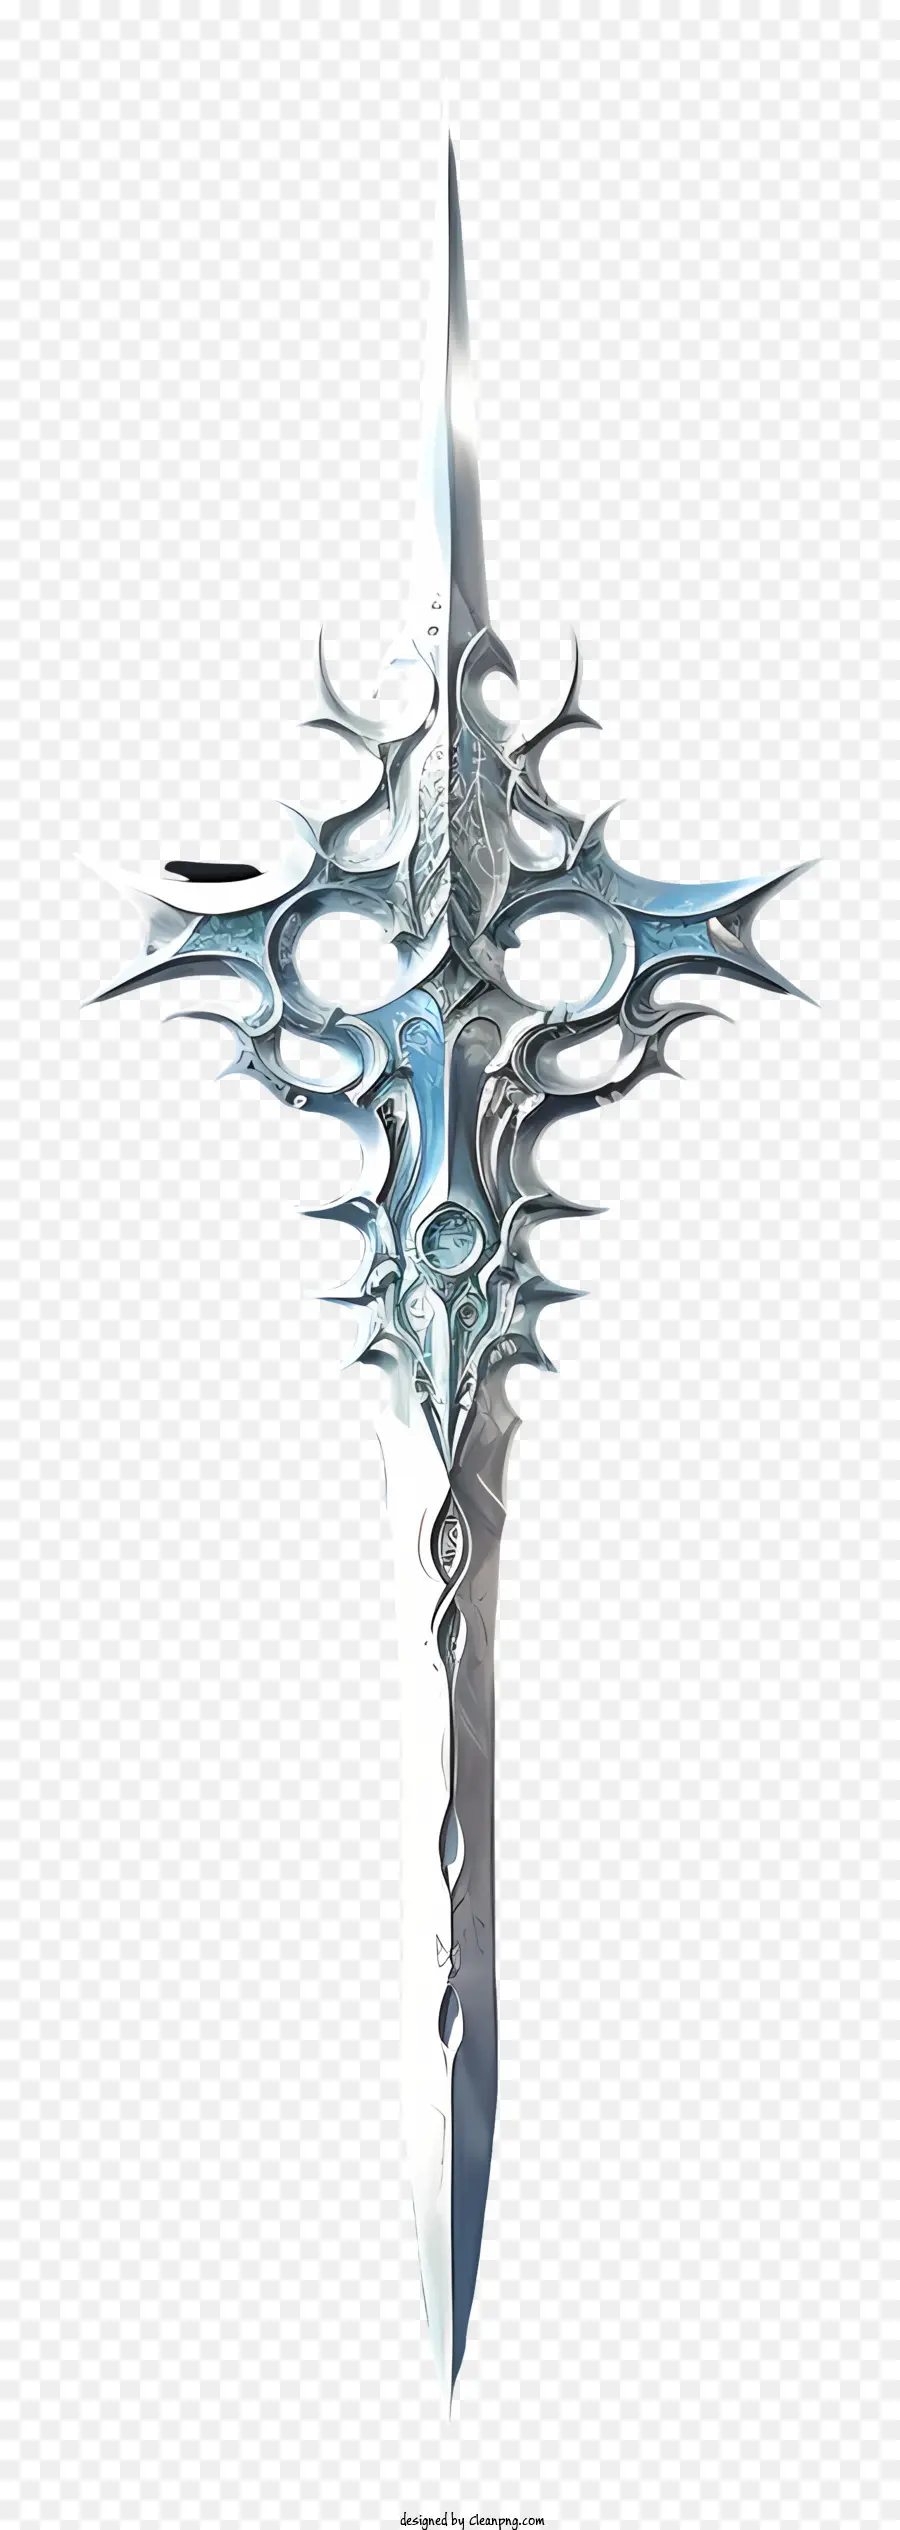 diamond sword surrealist-fantasy sword cross silver sword intricate details